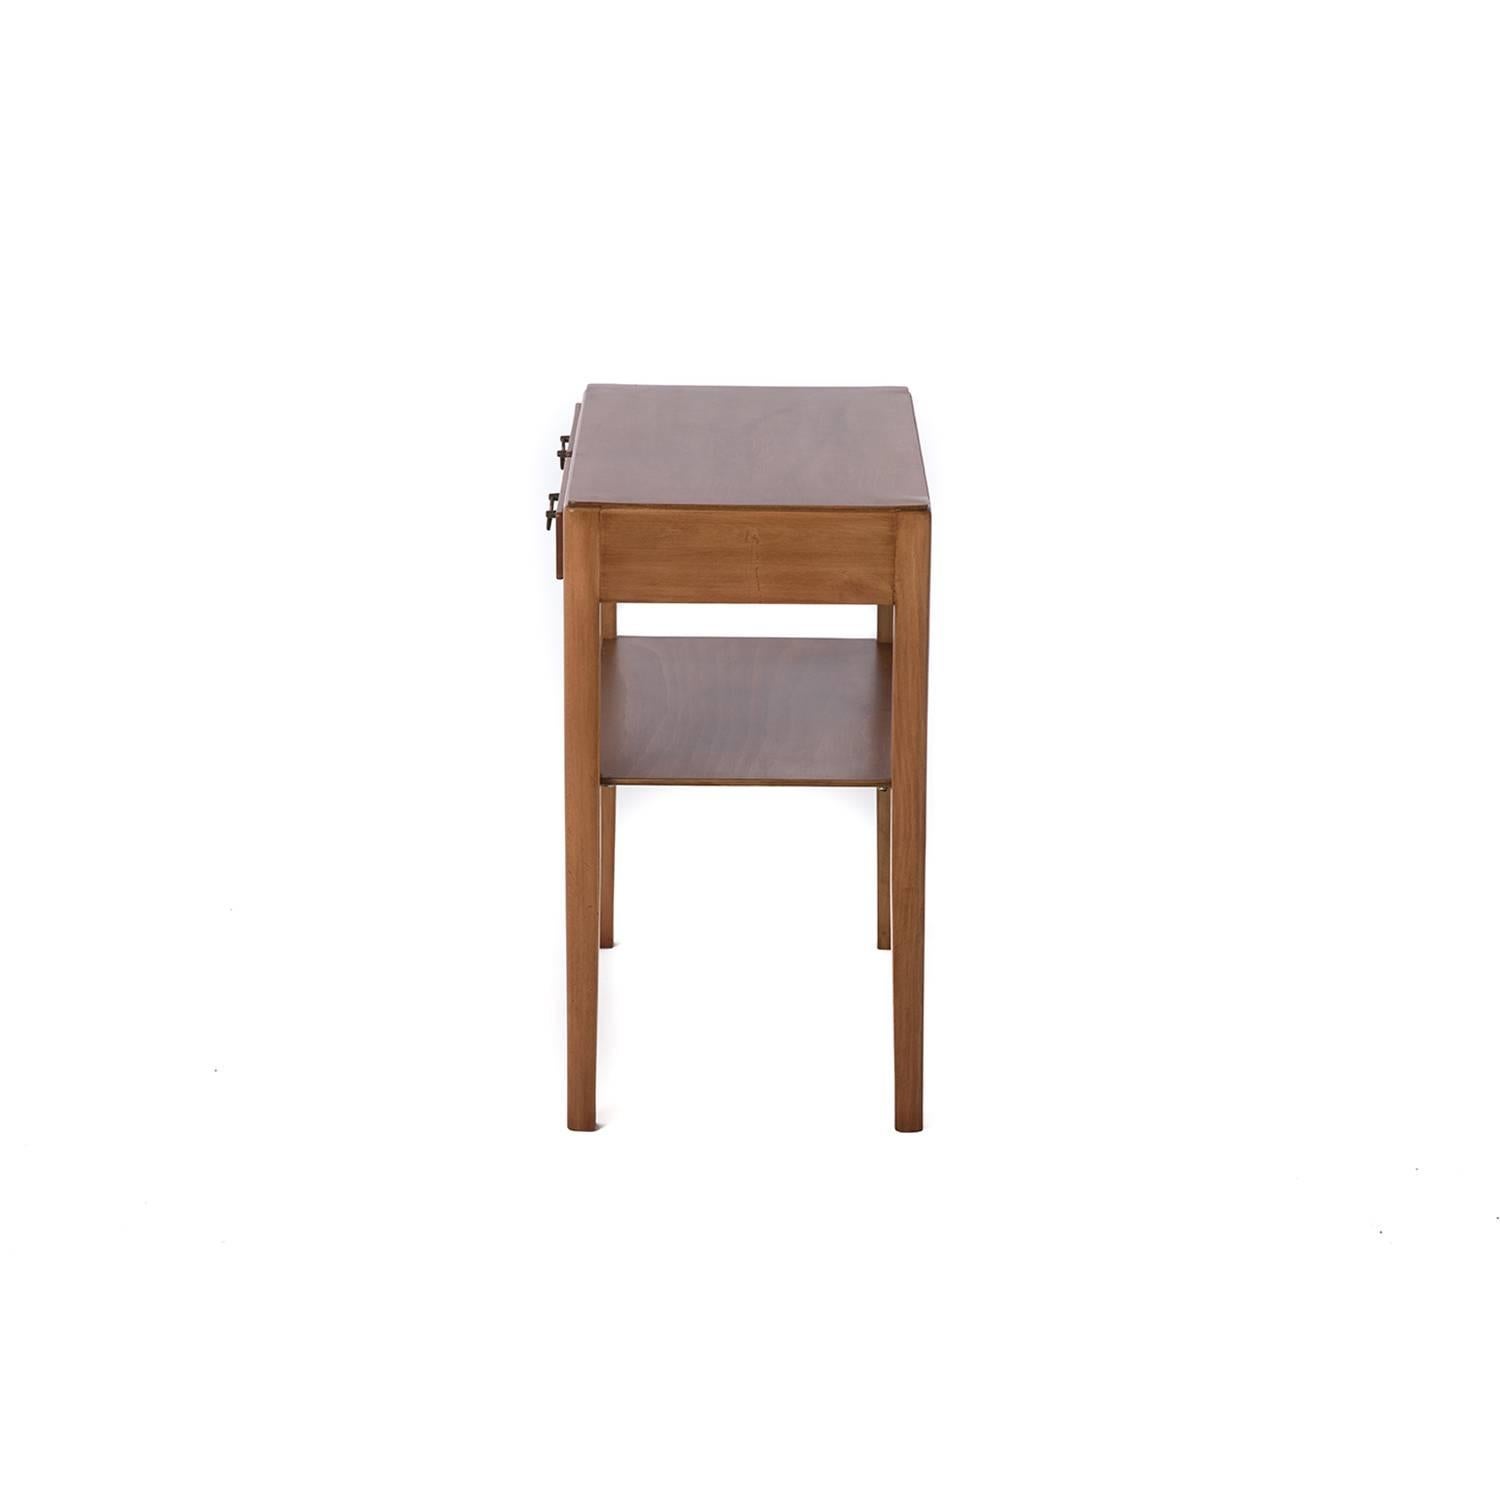 Scandinavian Modern Danish Modern Mahogany Occasional Table with Drawers and Shelf